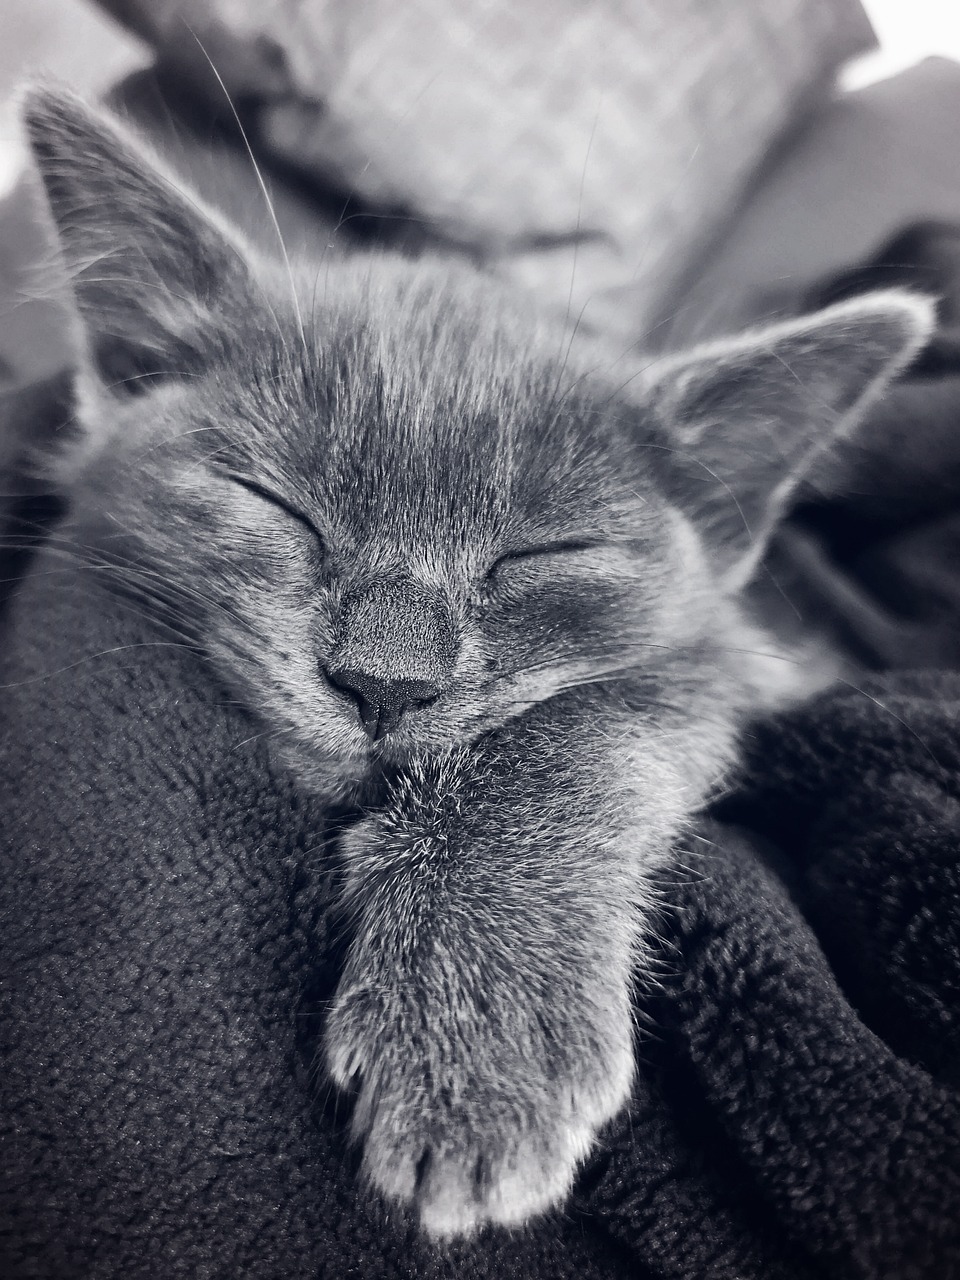 close up of sleeping cat with grey fur